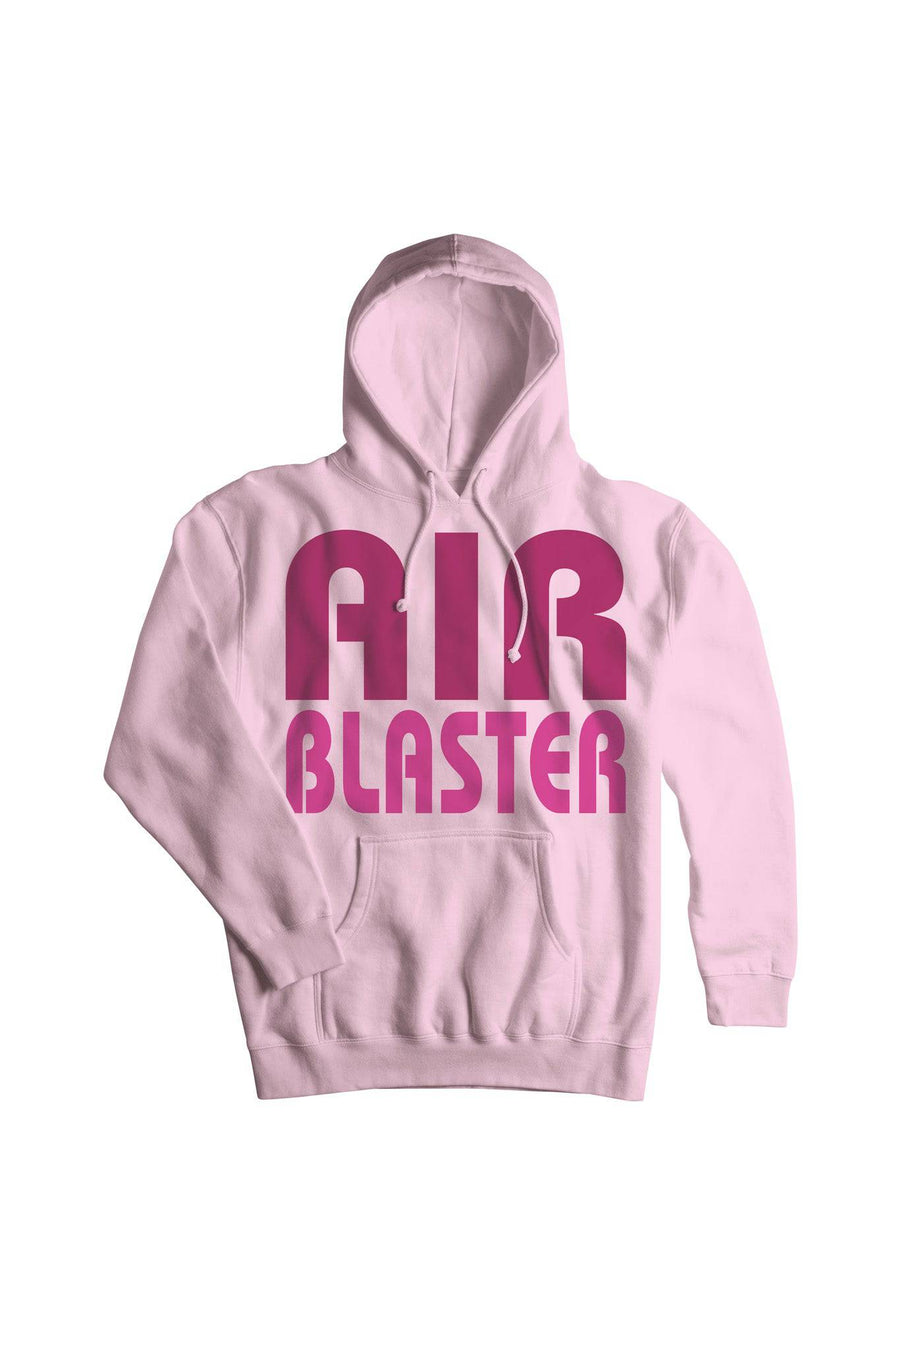 2022 Airblaster Air Stack Hoody in Pale Pink